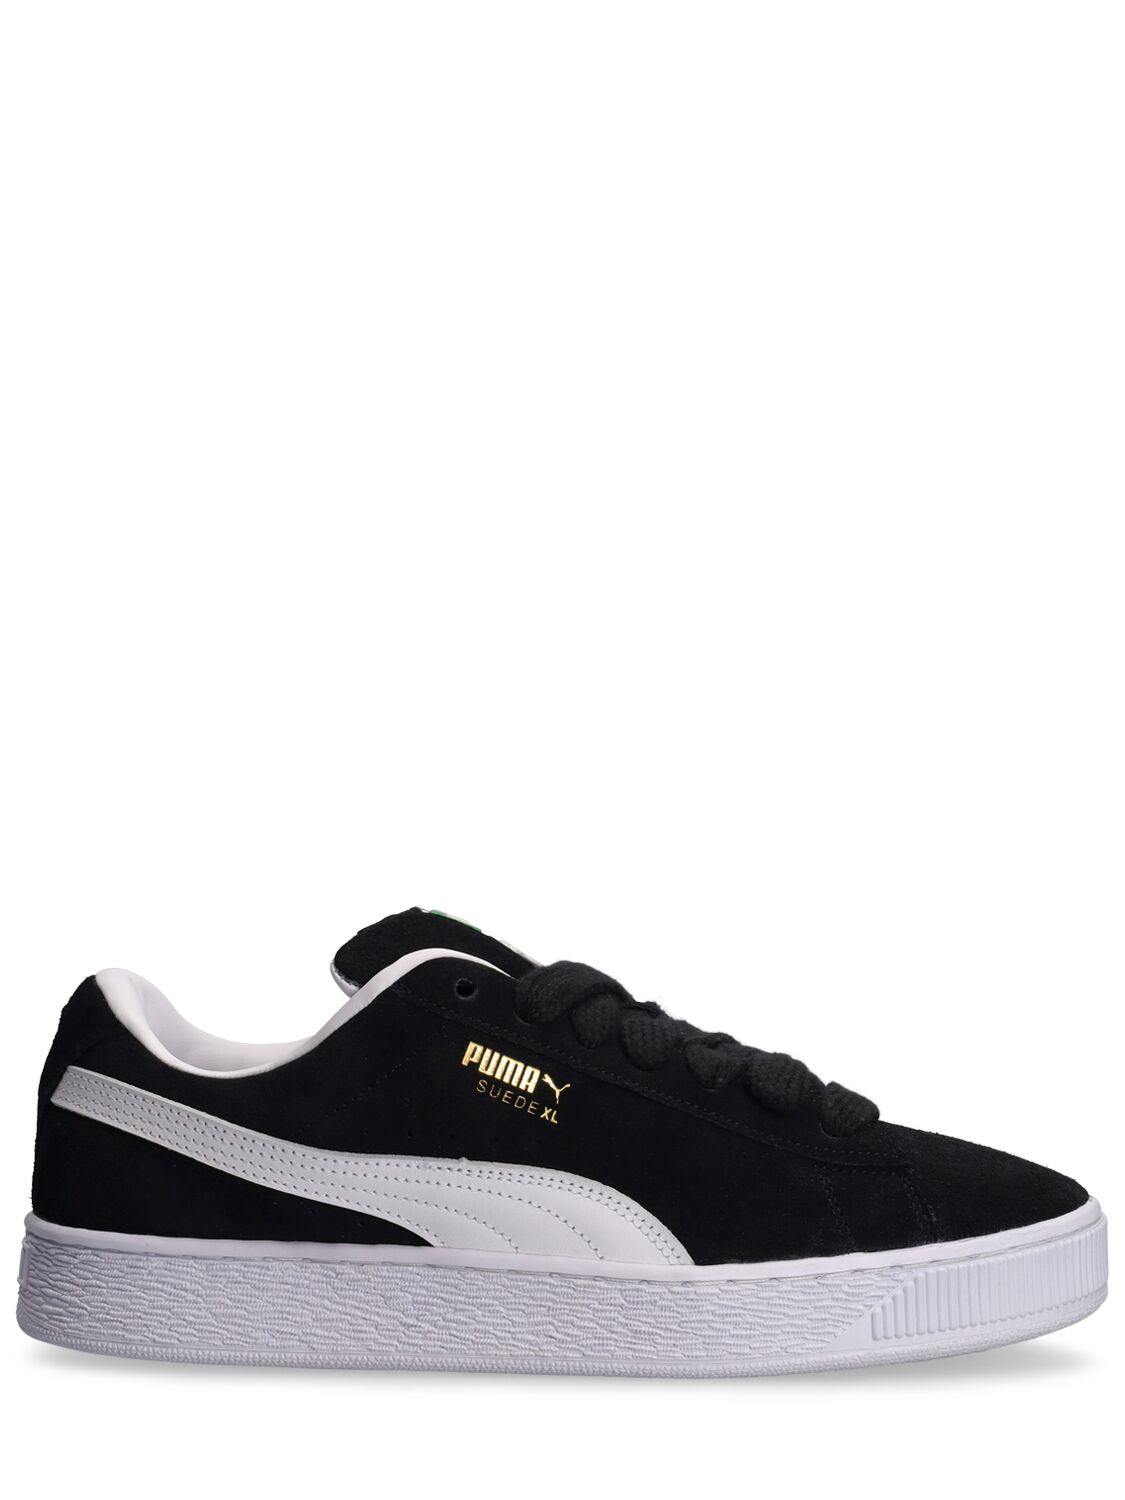 Puma Suede Xl Sneakers In Black,white